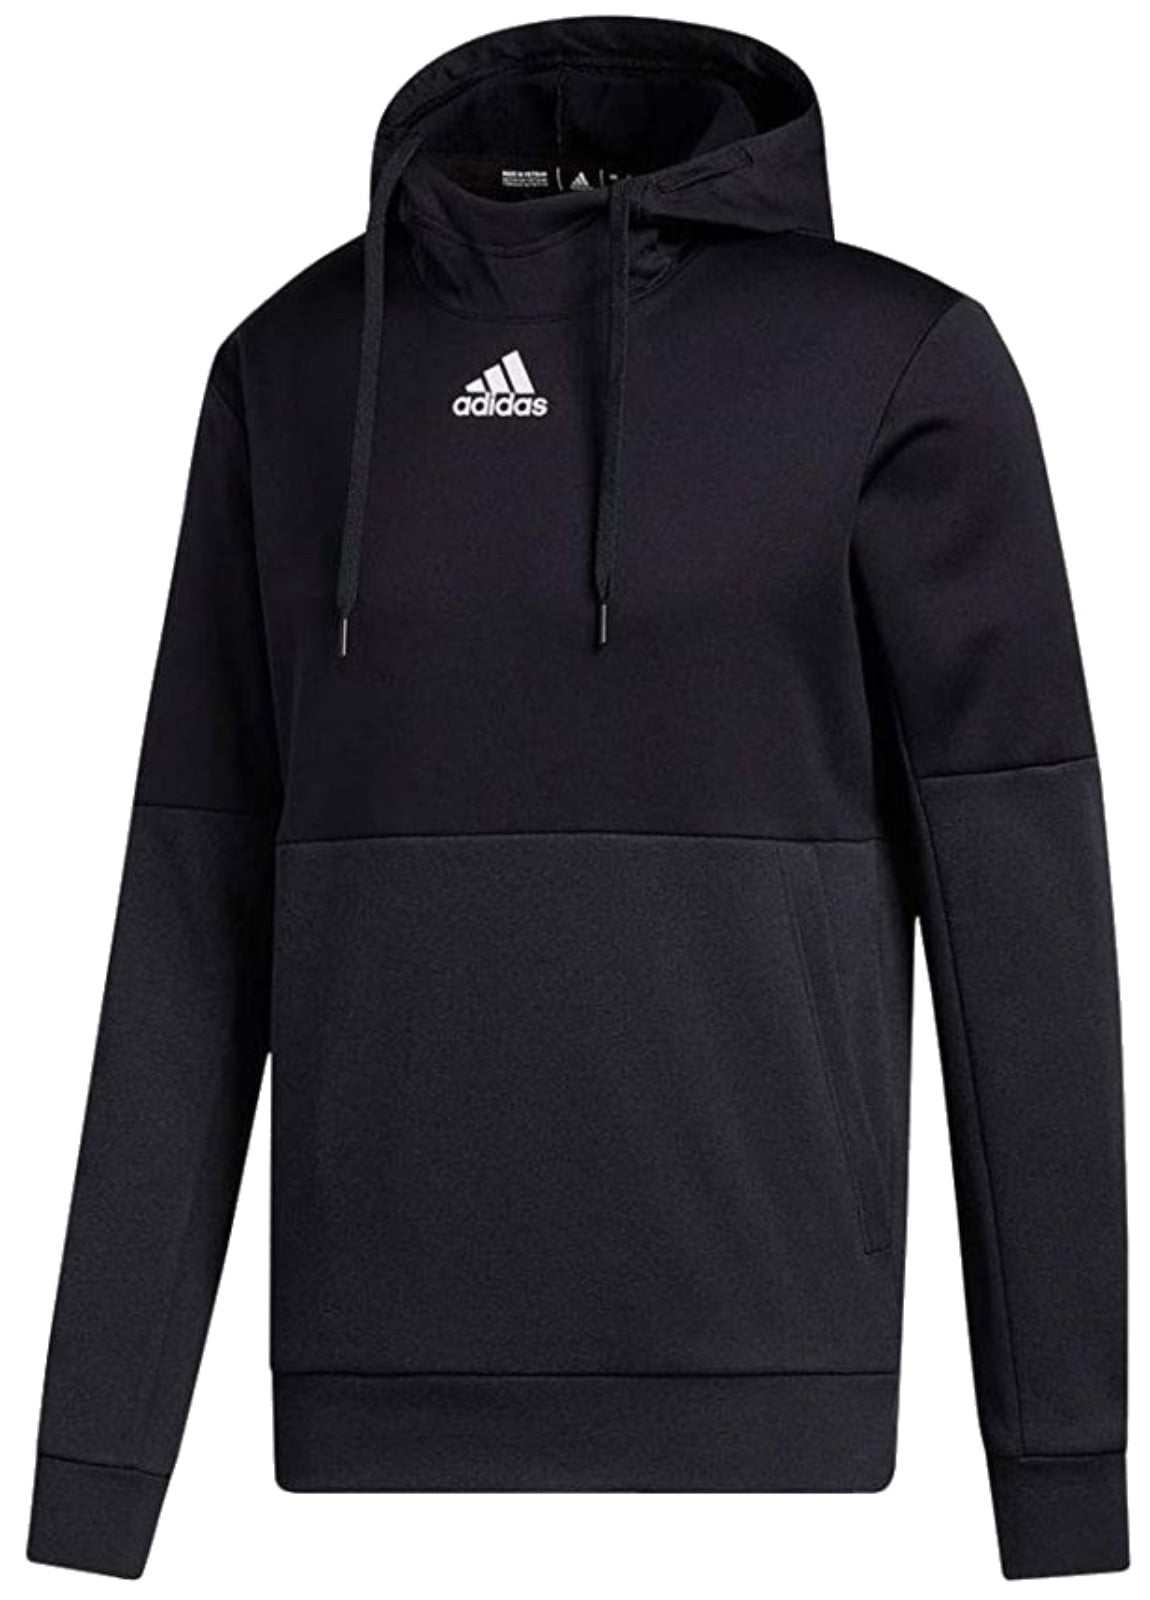 Adidas Men's Team Issue Training Pullover Hooded Sweatshirt Black/White (M)  